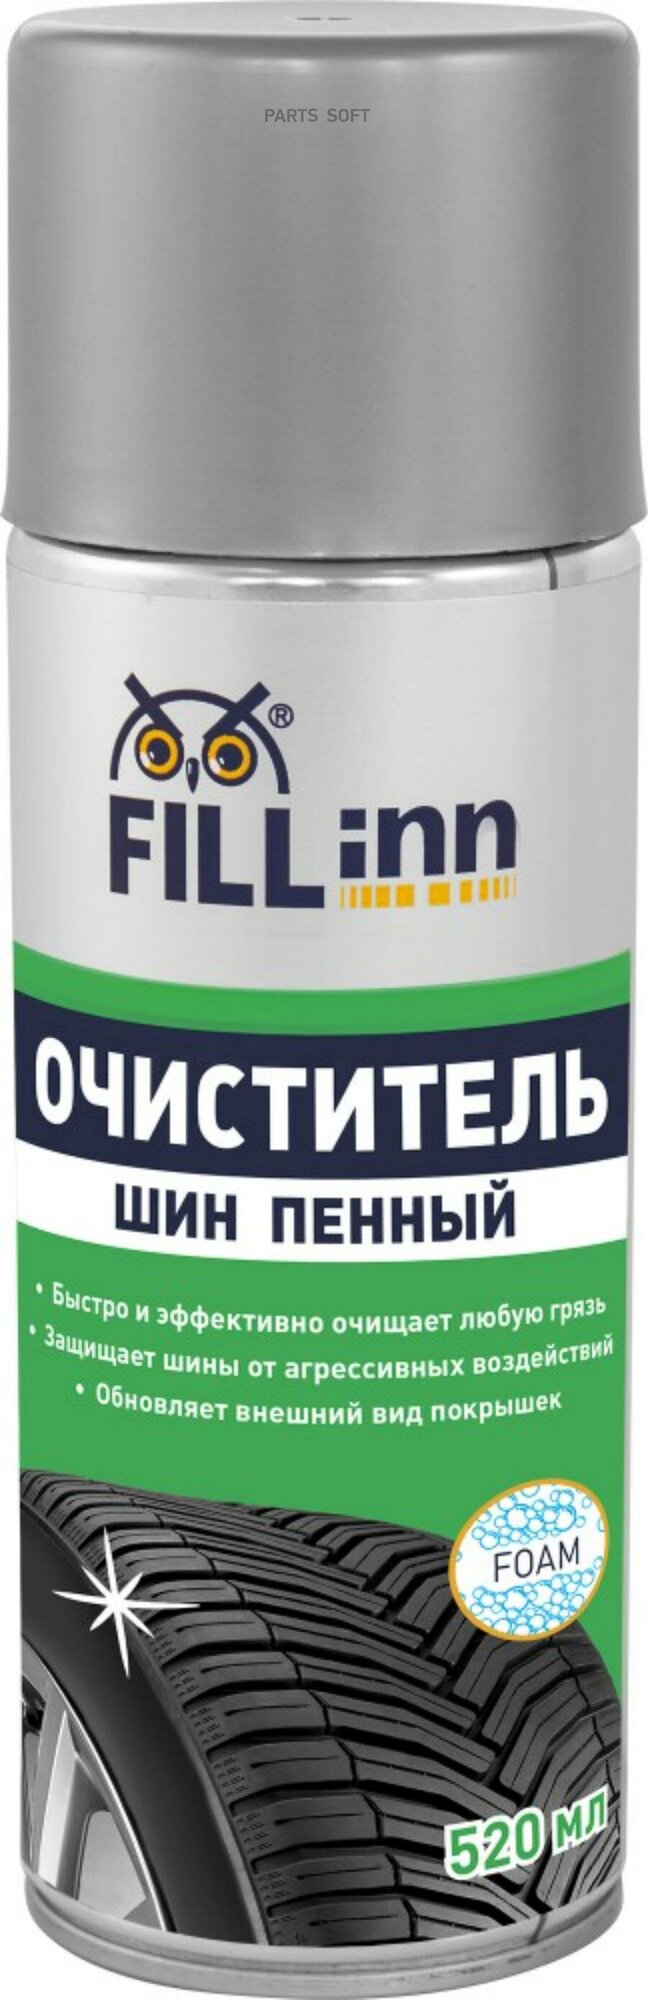 FILLINN FL063 Очиститеь шин пенный аэрозоь 520 м FILLinn FL063